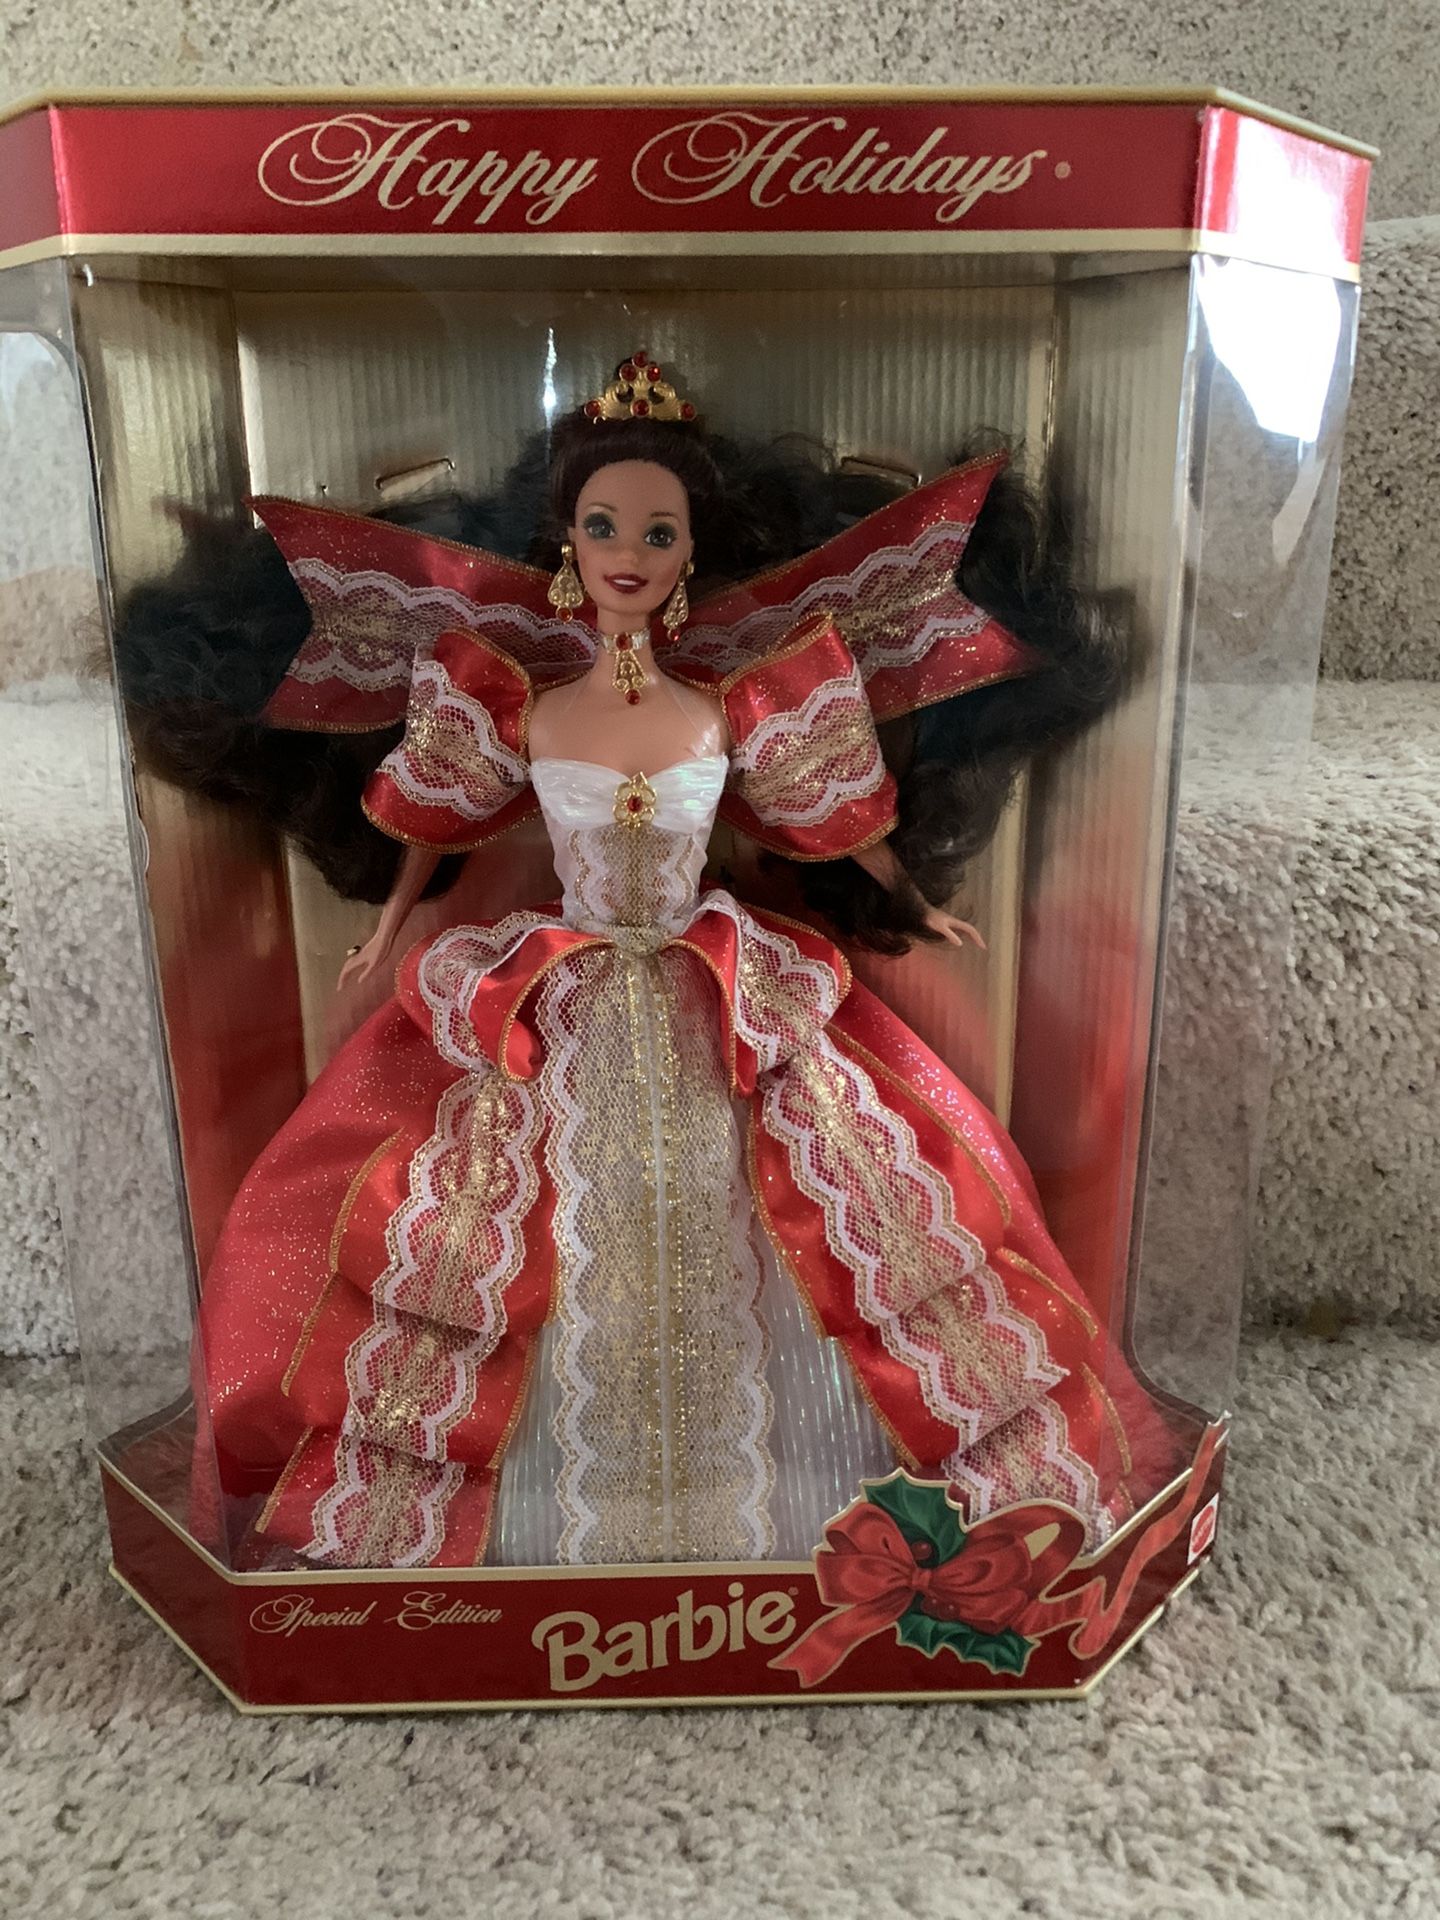 Special Edition Barbie